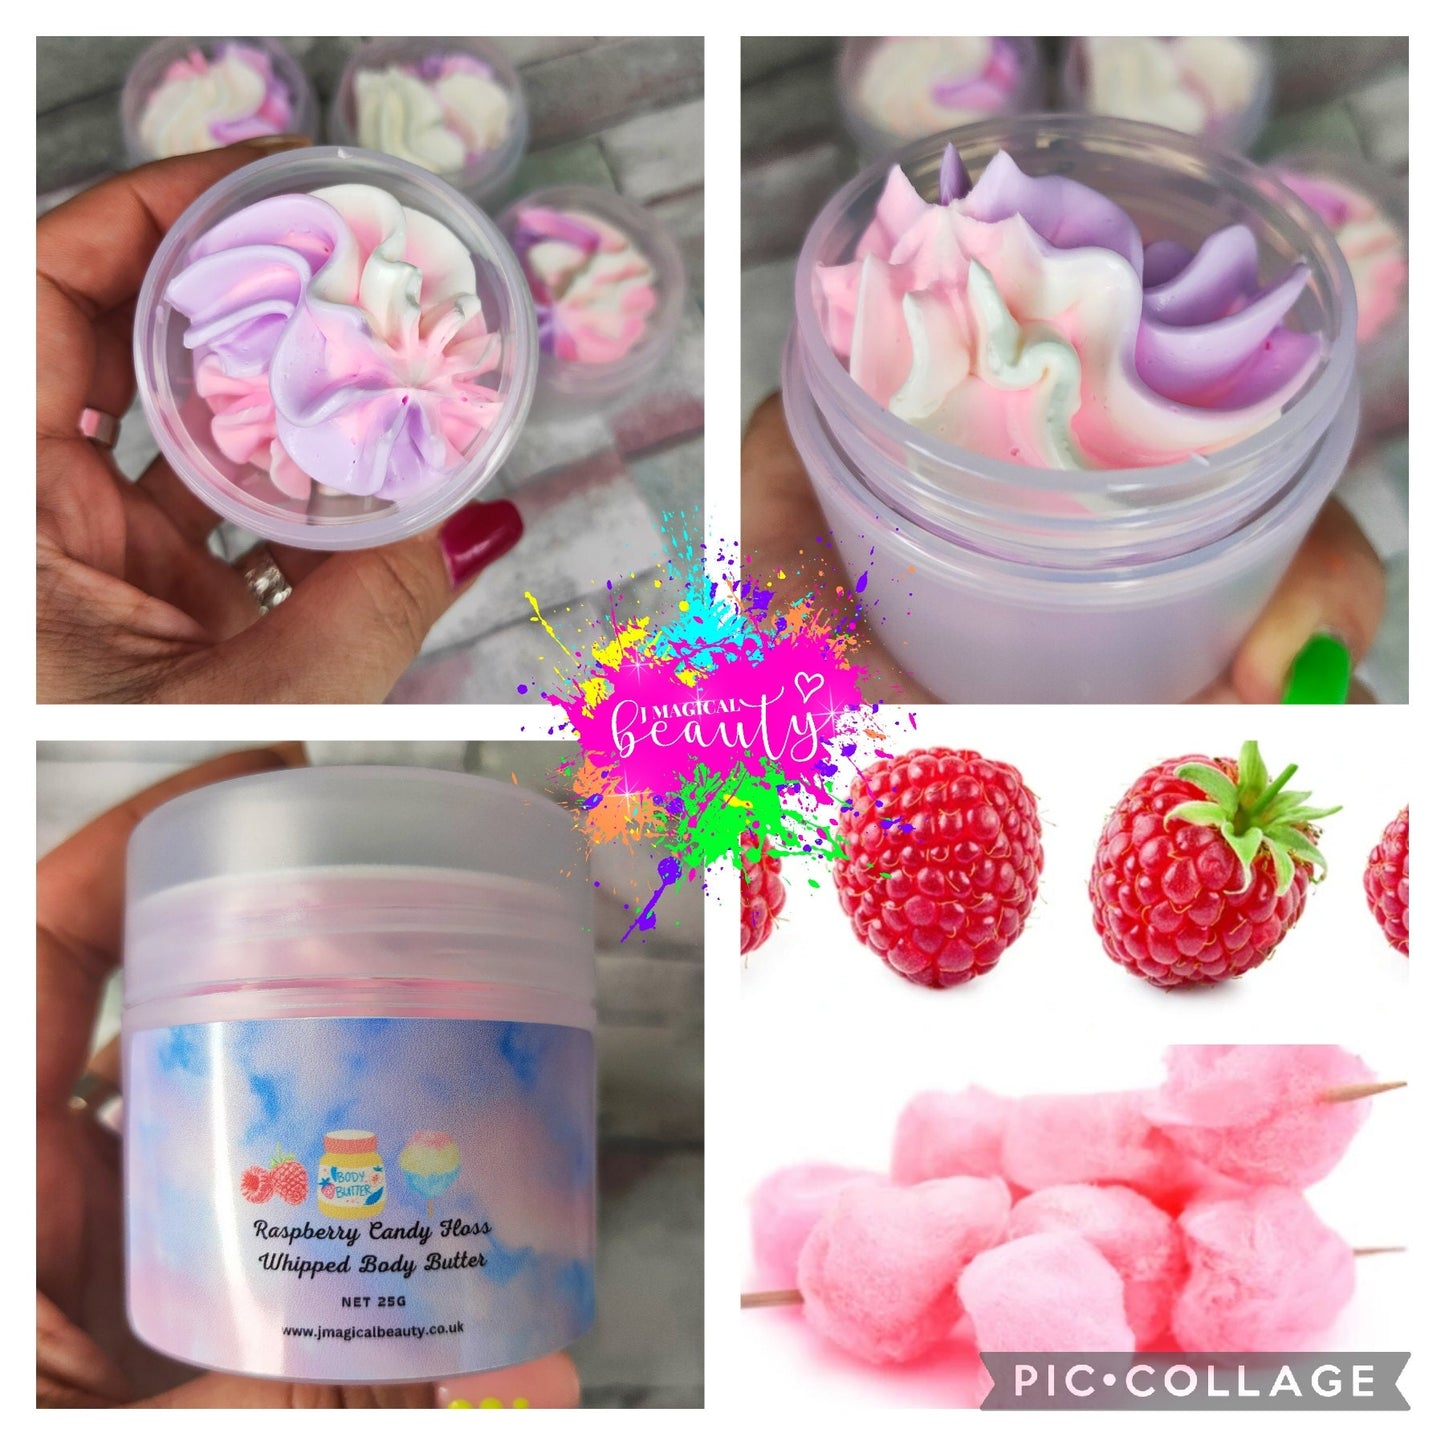 Whipped Body Butter Raspberry Candy Floss scent, 25G NET